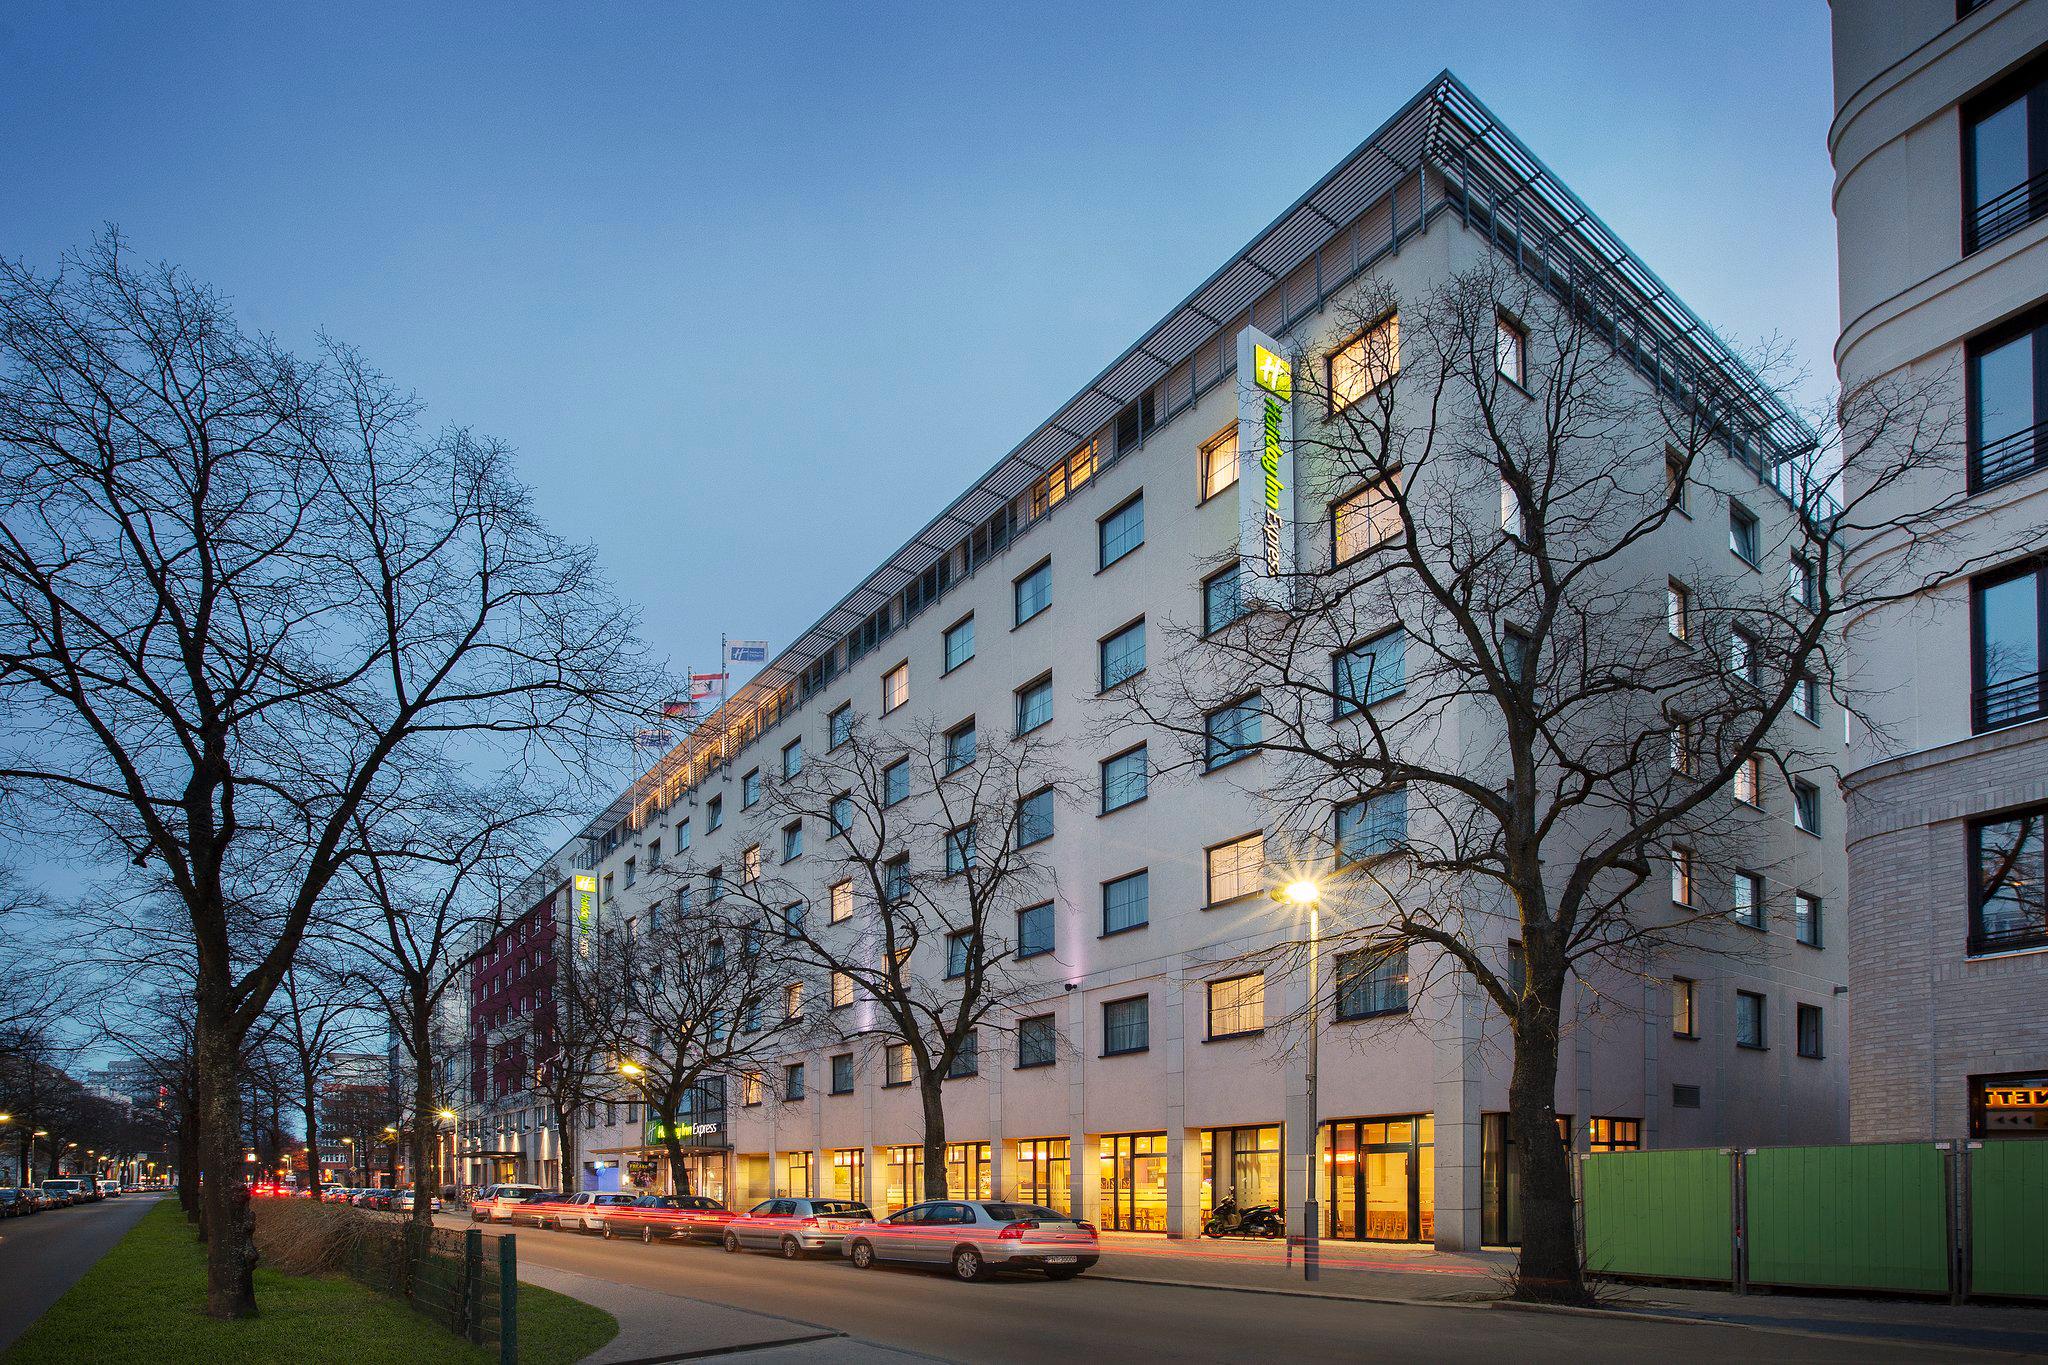 Holiday Inn Express Berlin City Centre, an IHG Hotel, Stresemannstrasse 49 in Berlin